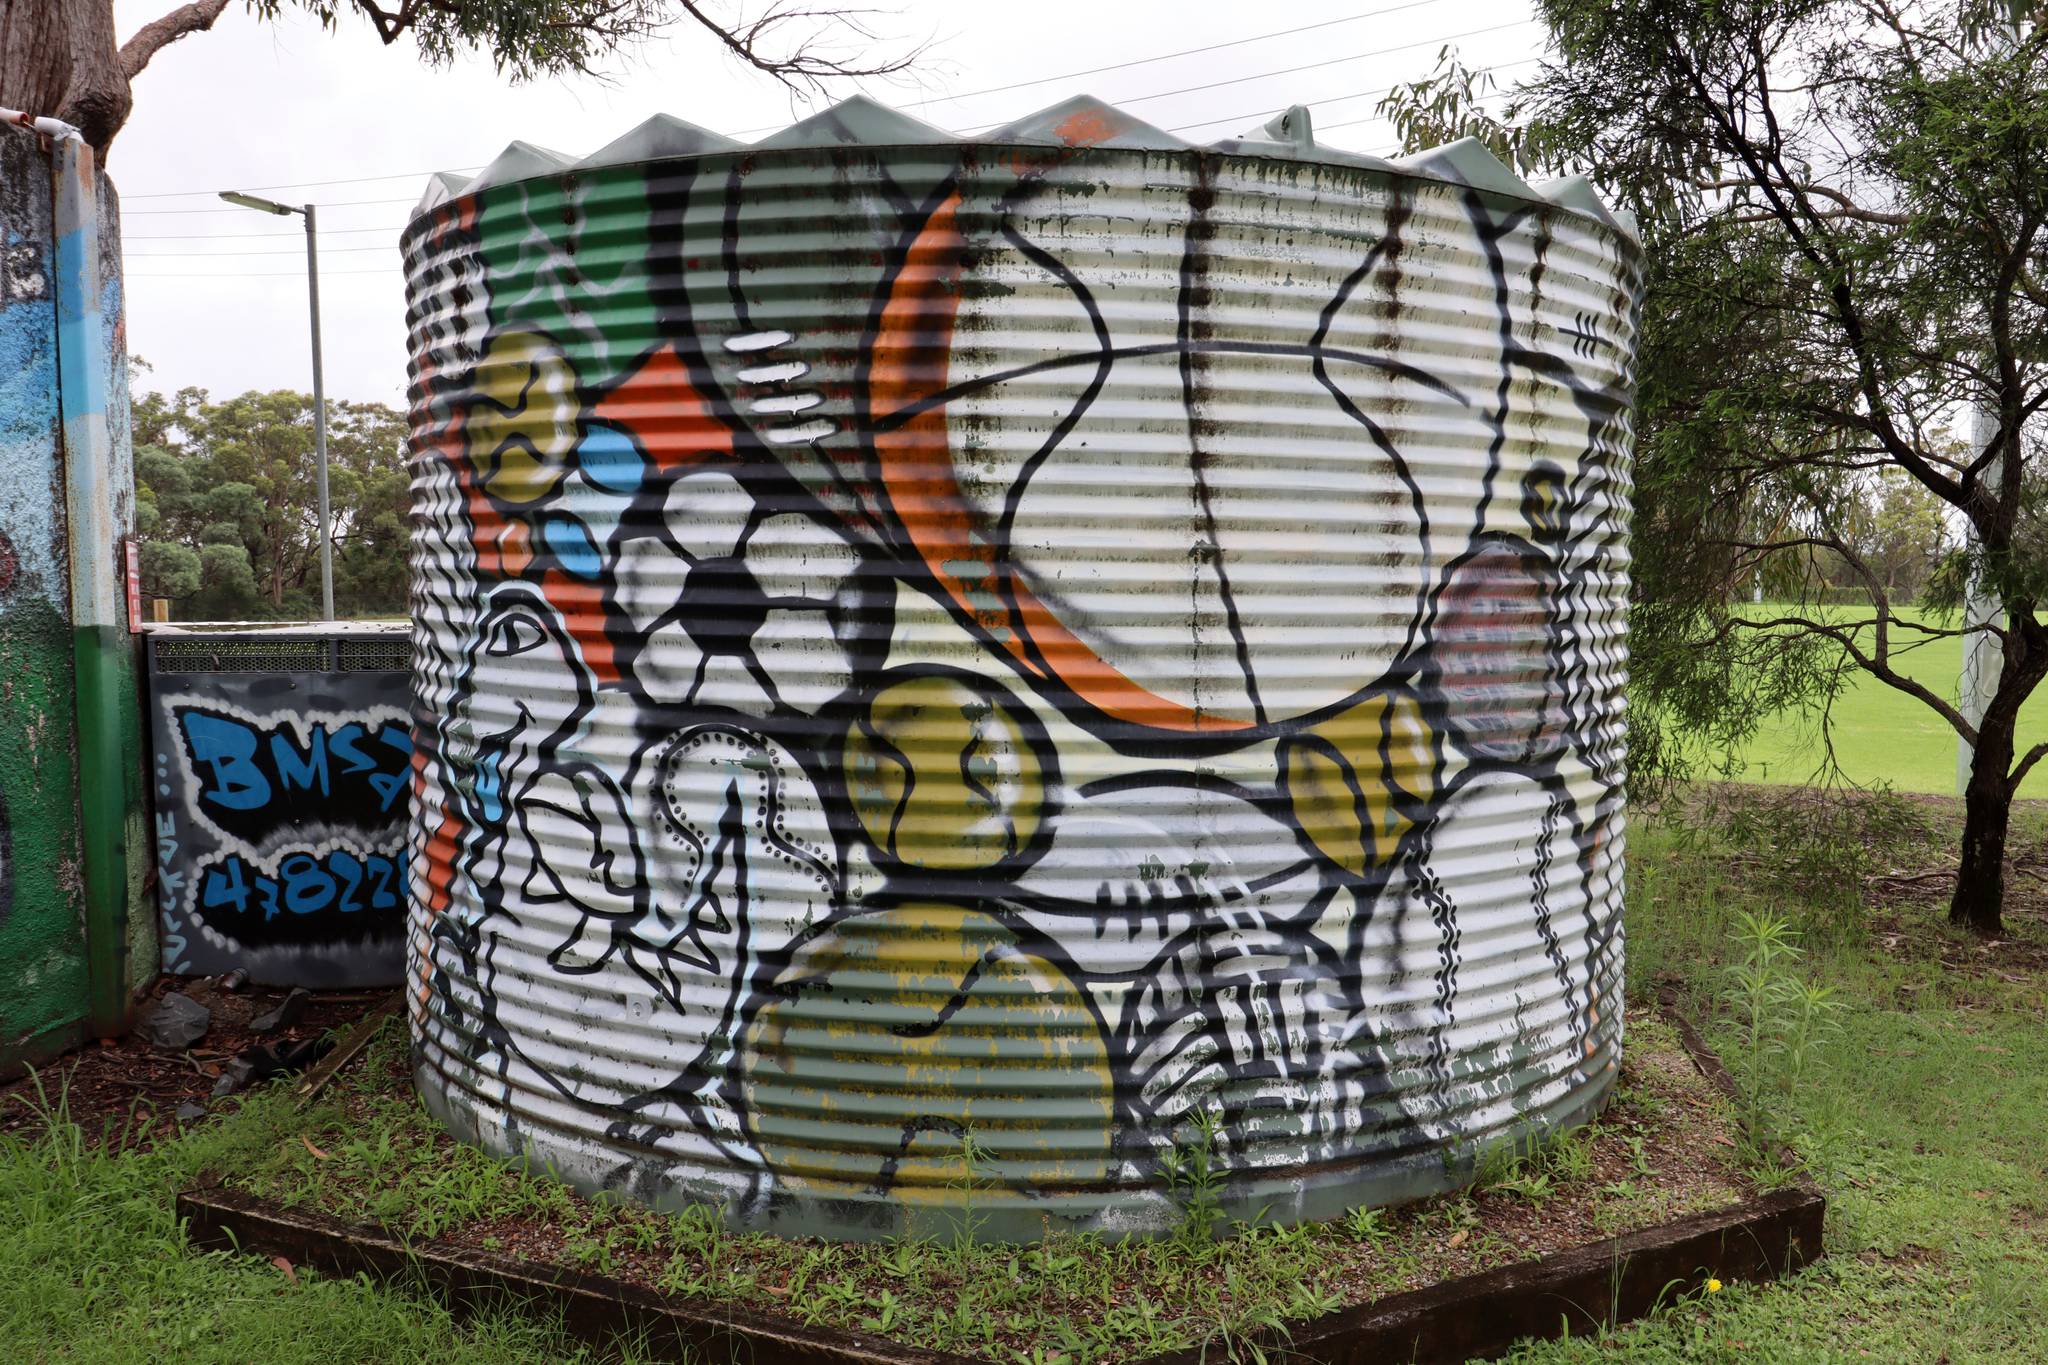 Blue Mountains Street Art Collaborative&mdash;Lapstone Oval